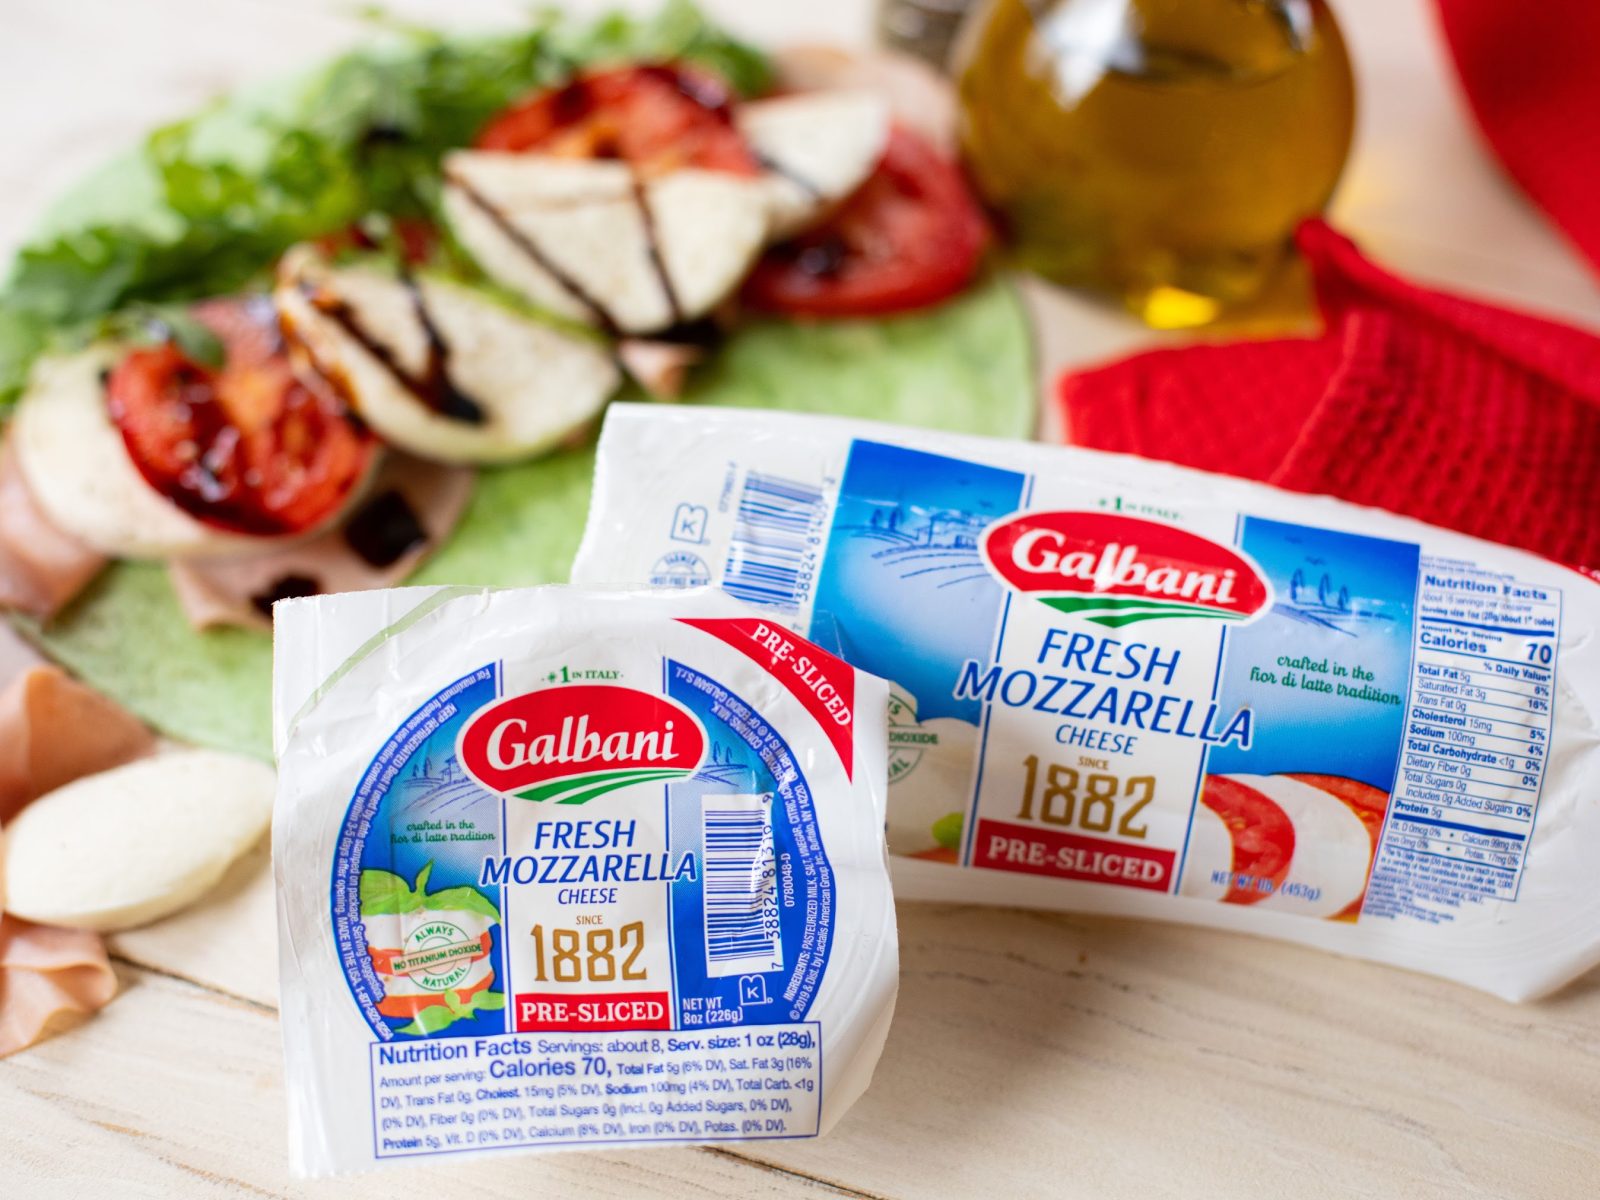 Galbani 1862 Fresh Mozzarella Cheese As Low As $2 At Publix on I Heart Publix